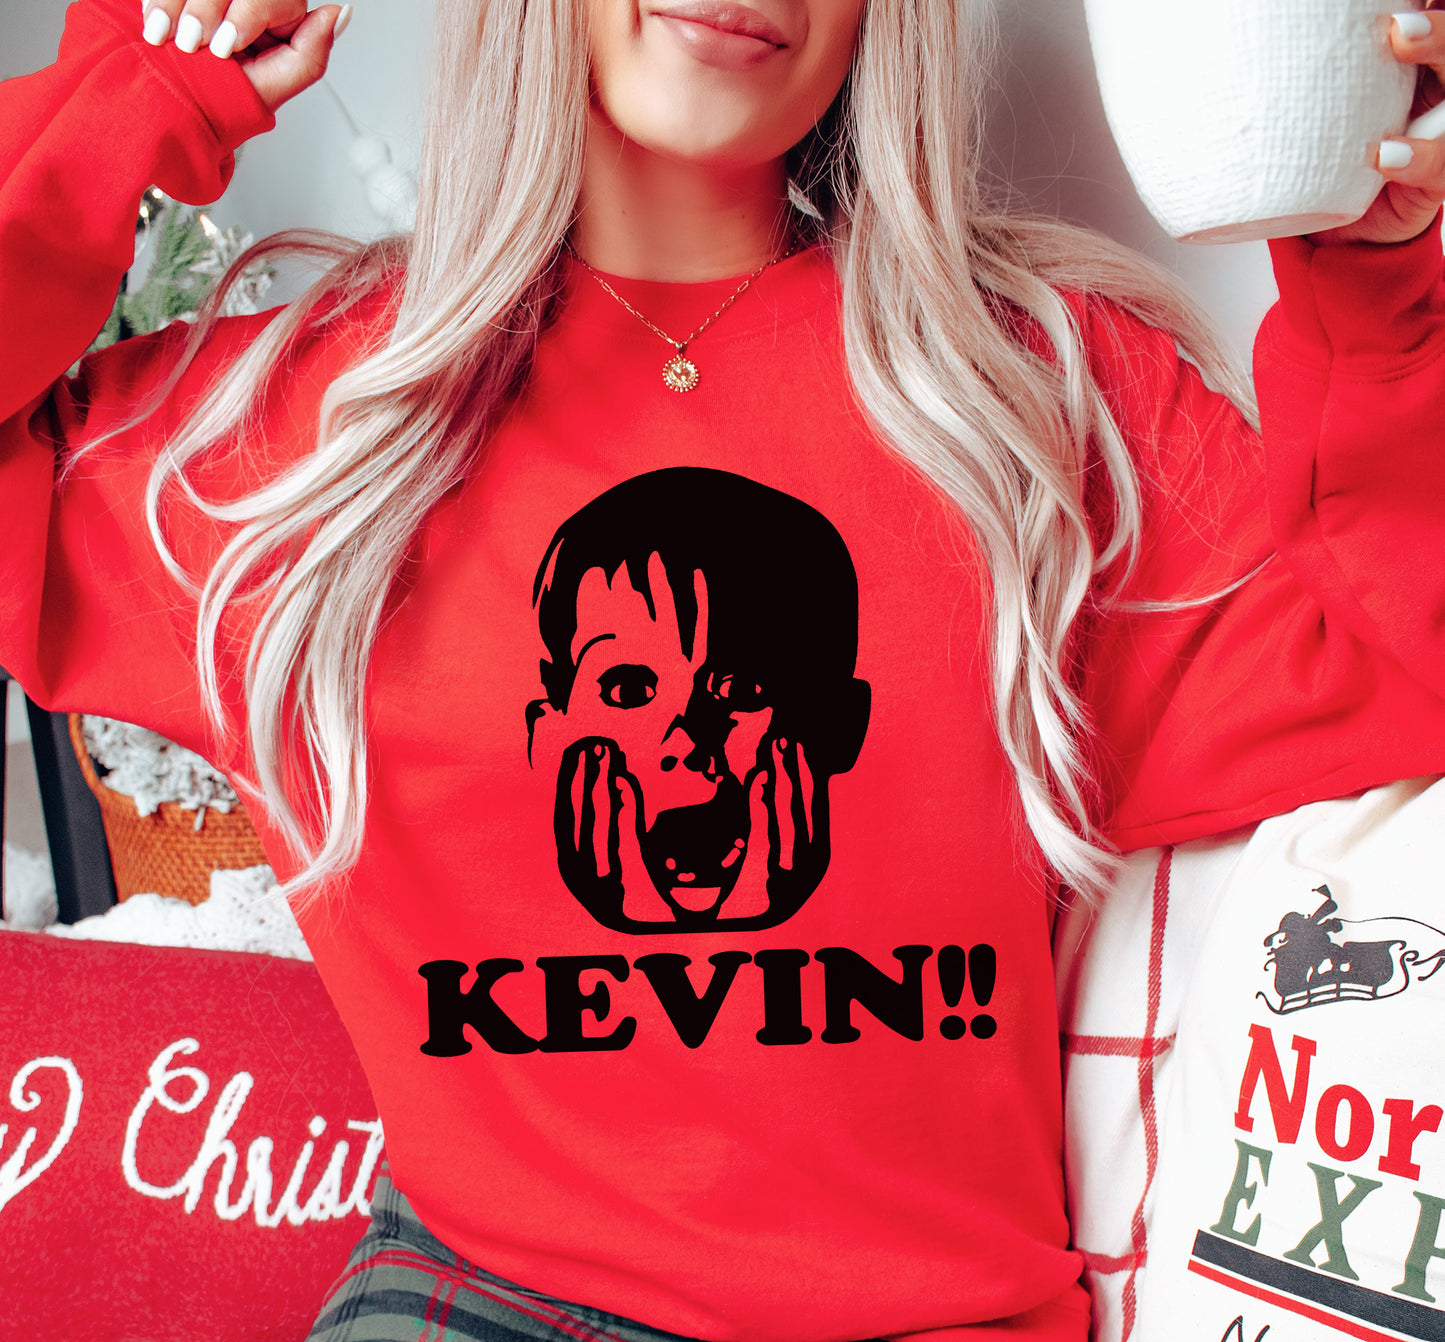 Kevin! Sweatshirt